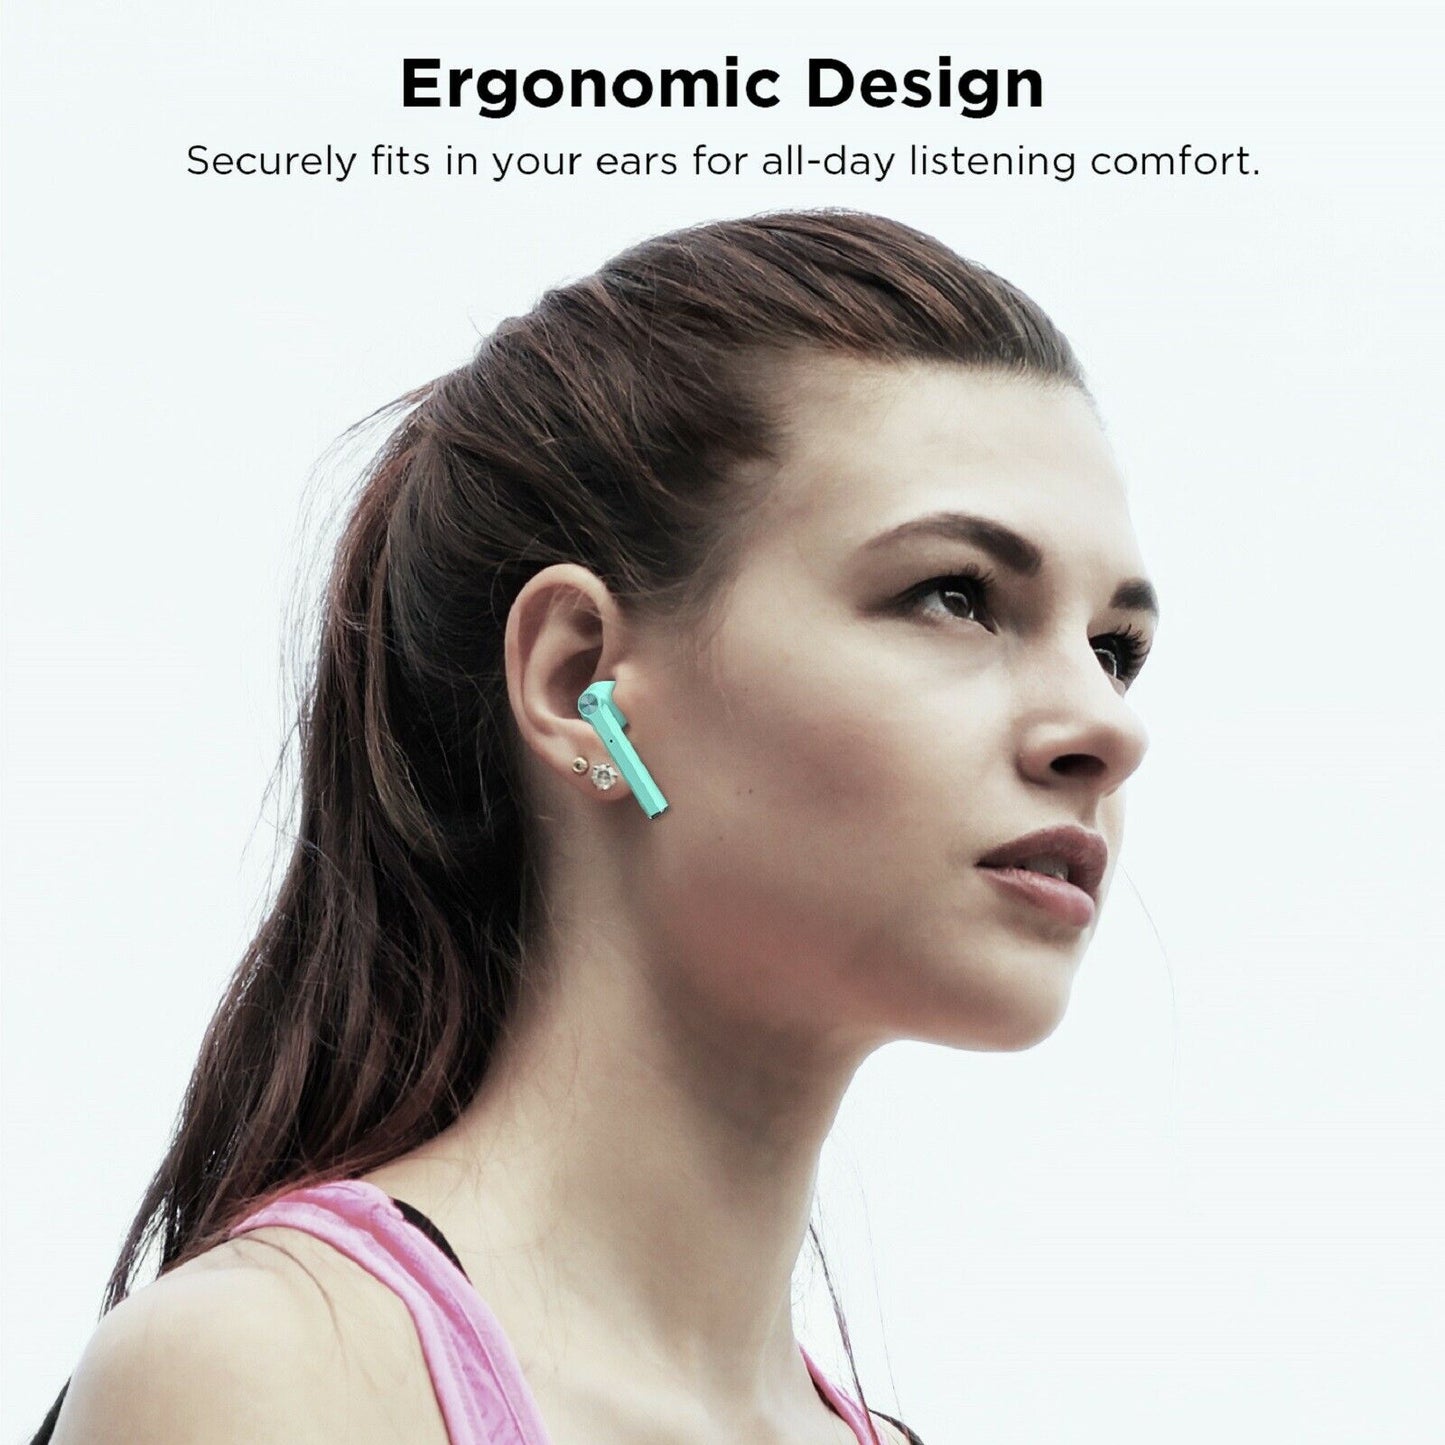 TWS Earphones Wireless Earbuds Headphones True Stereo Headset - ONXYG